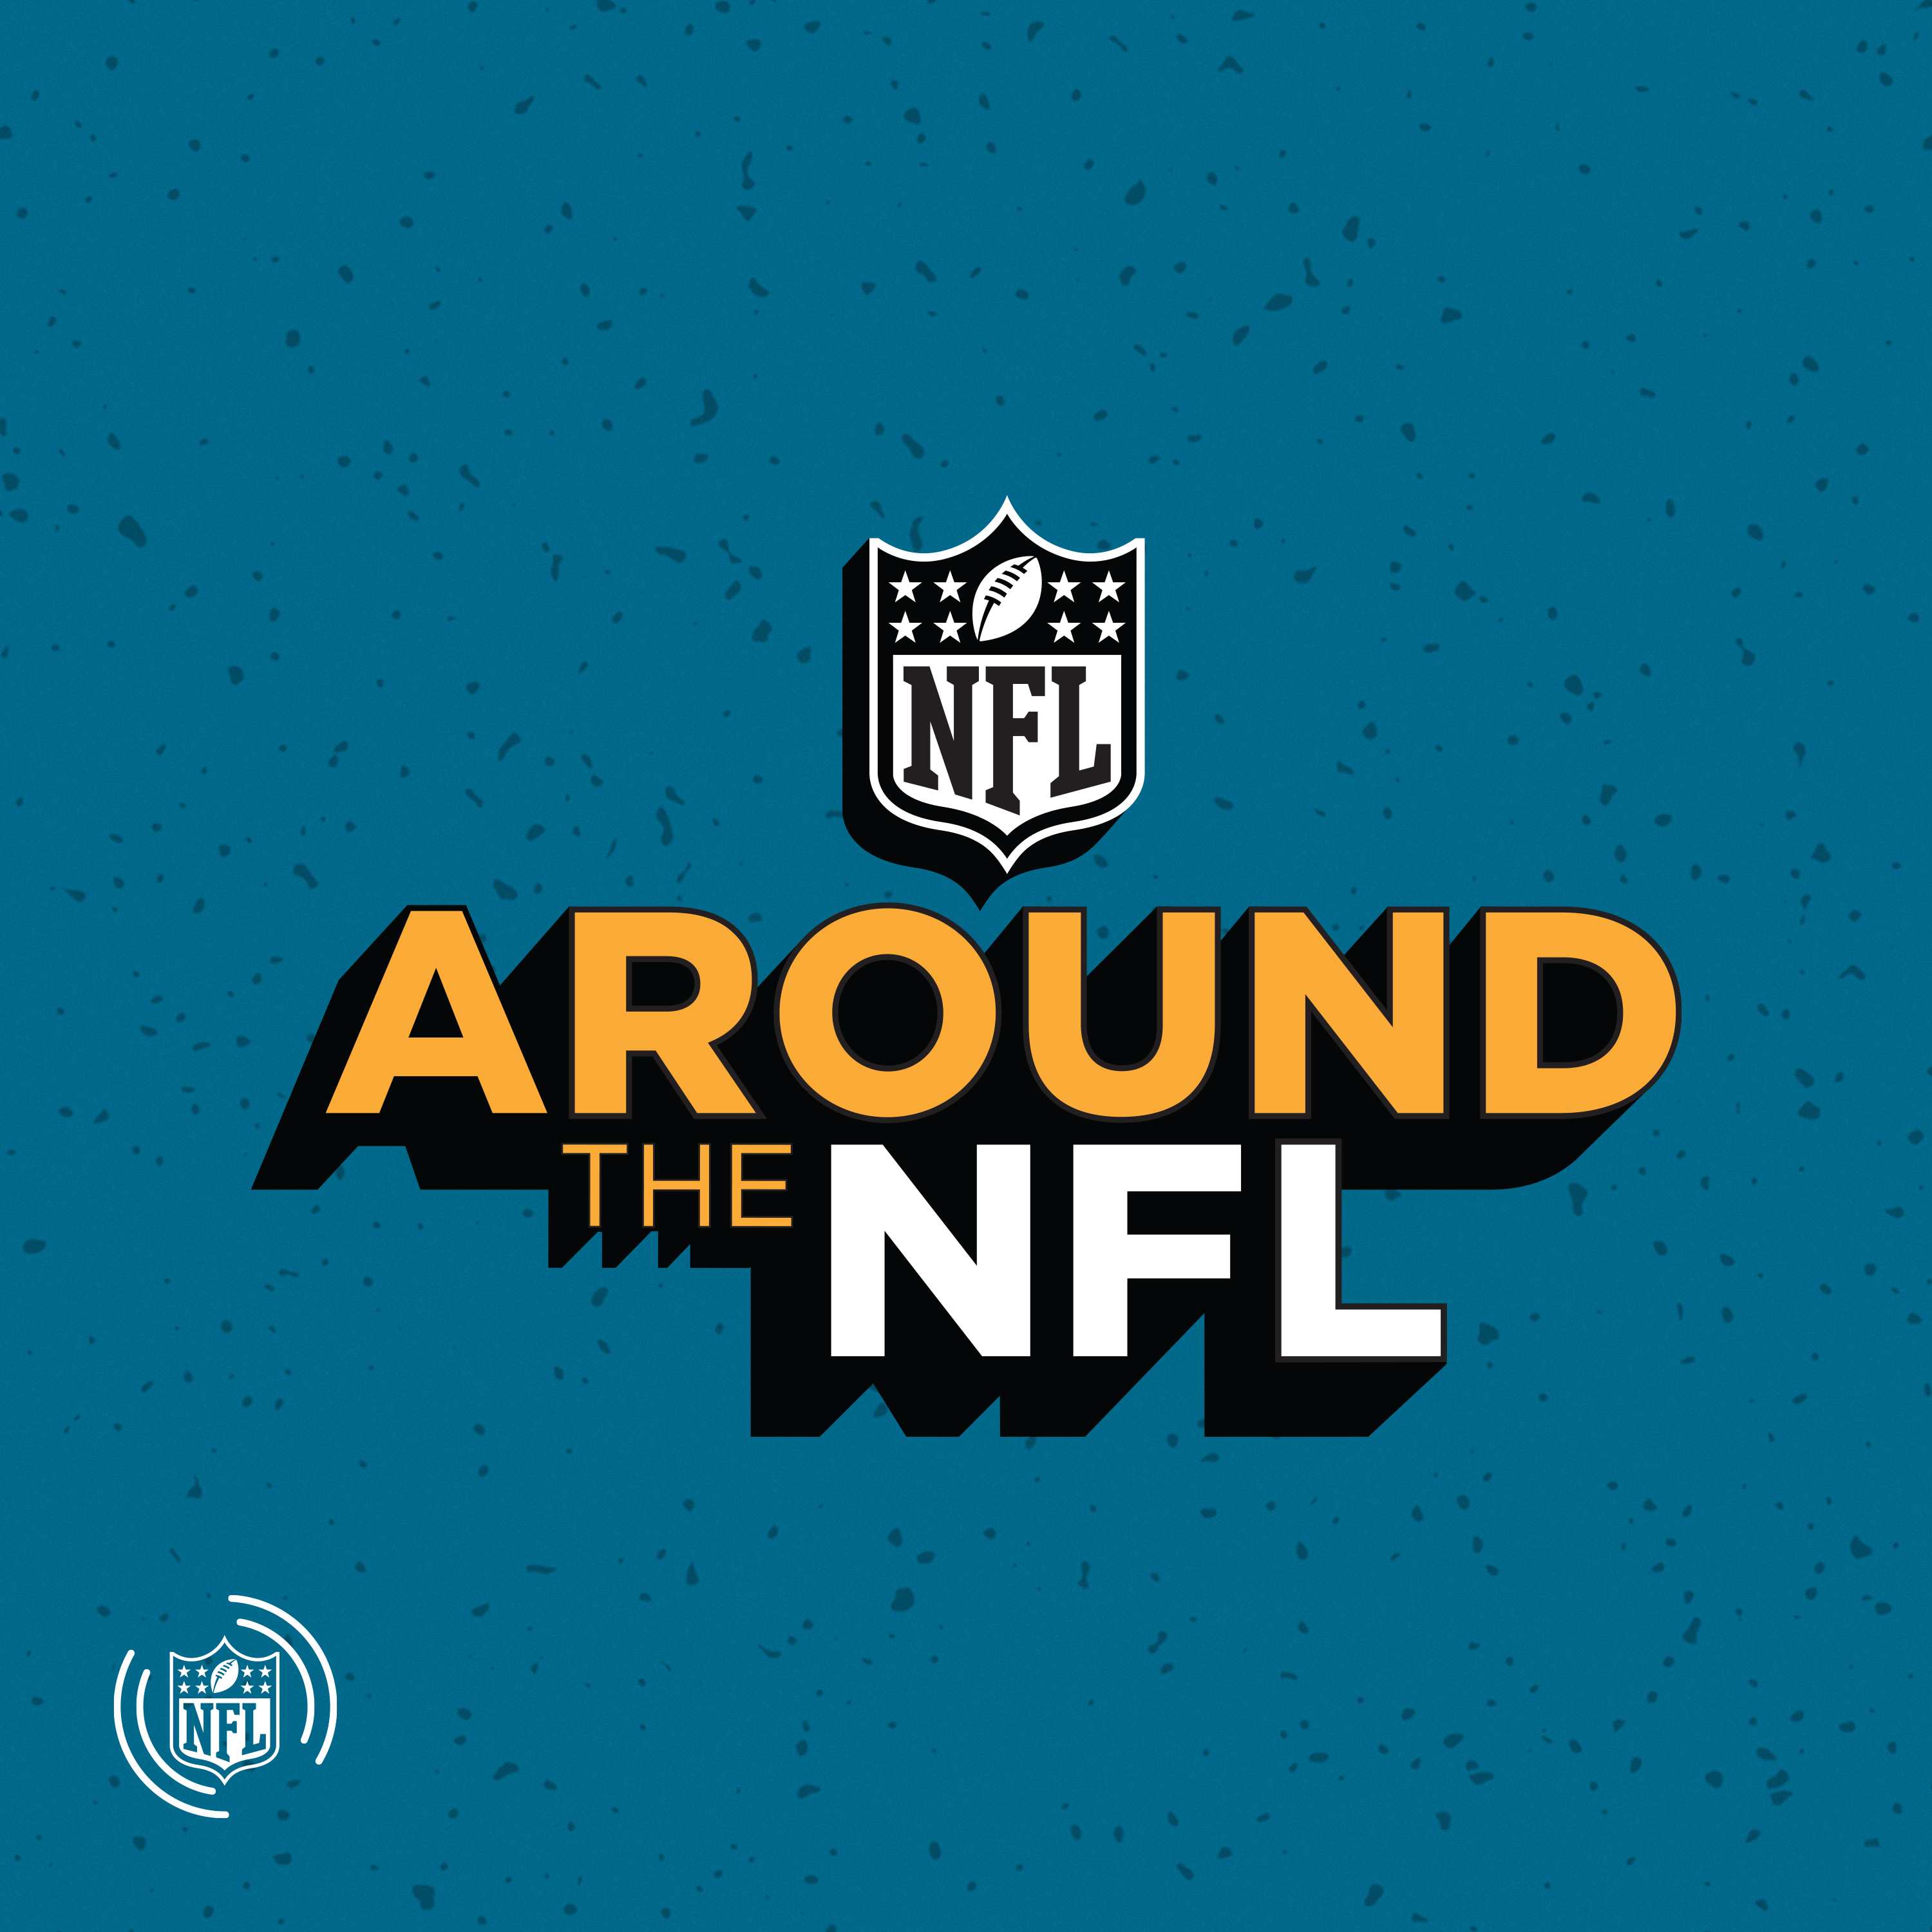 NFL ATL: Week 3 recap